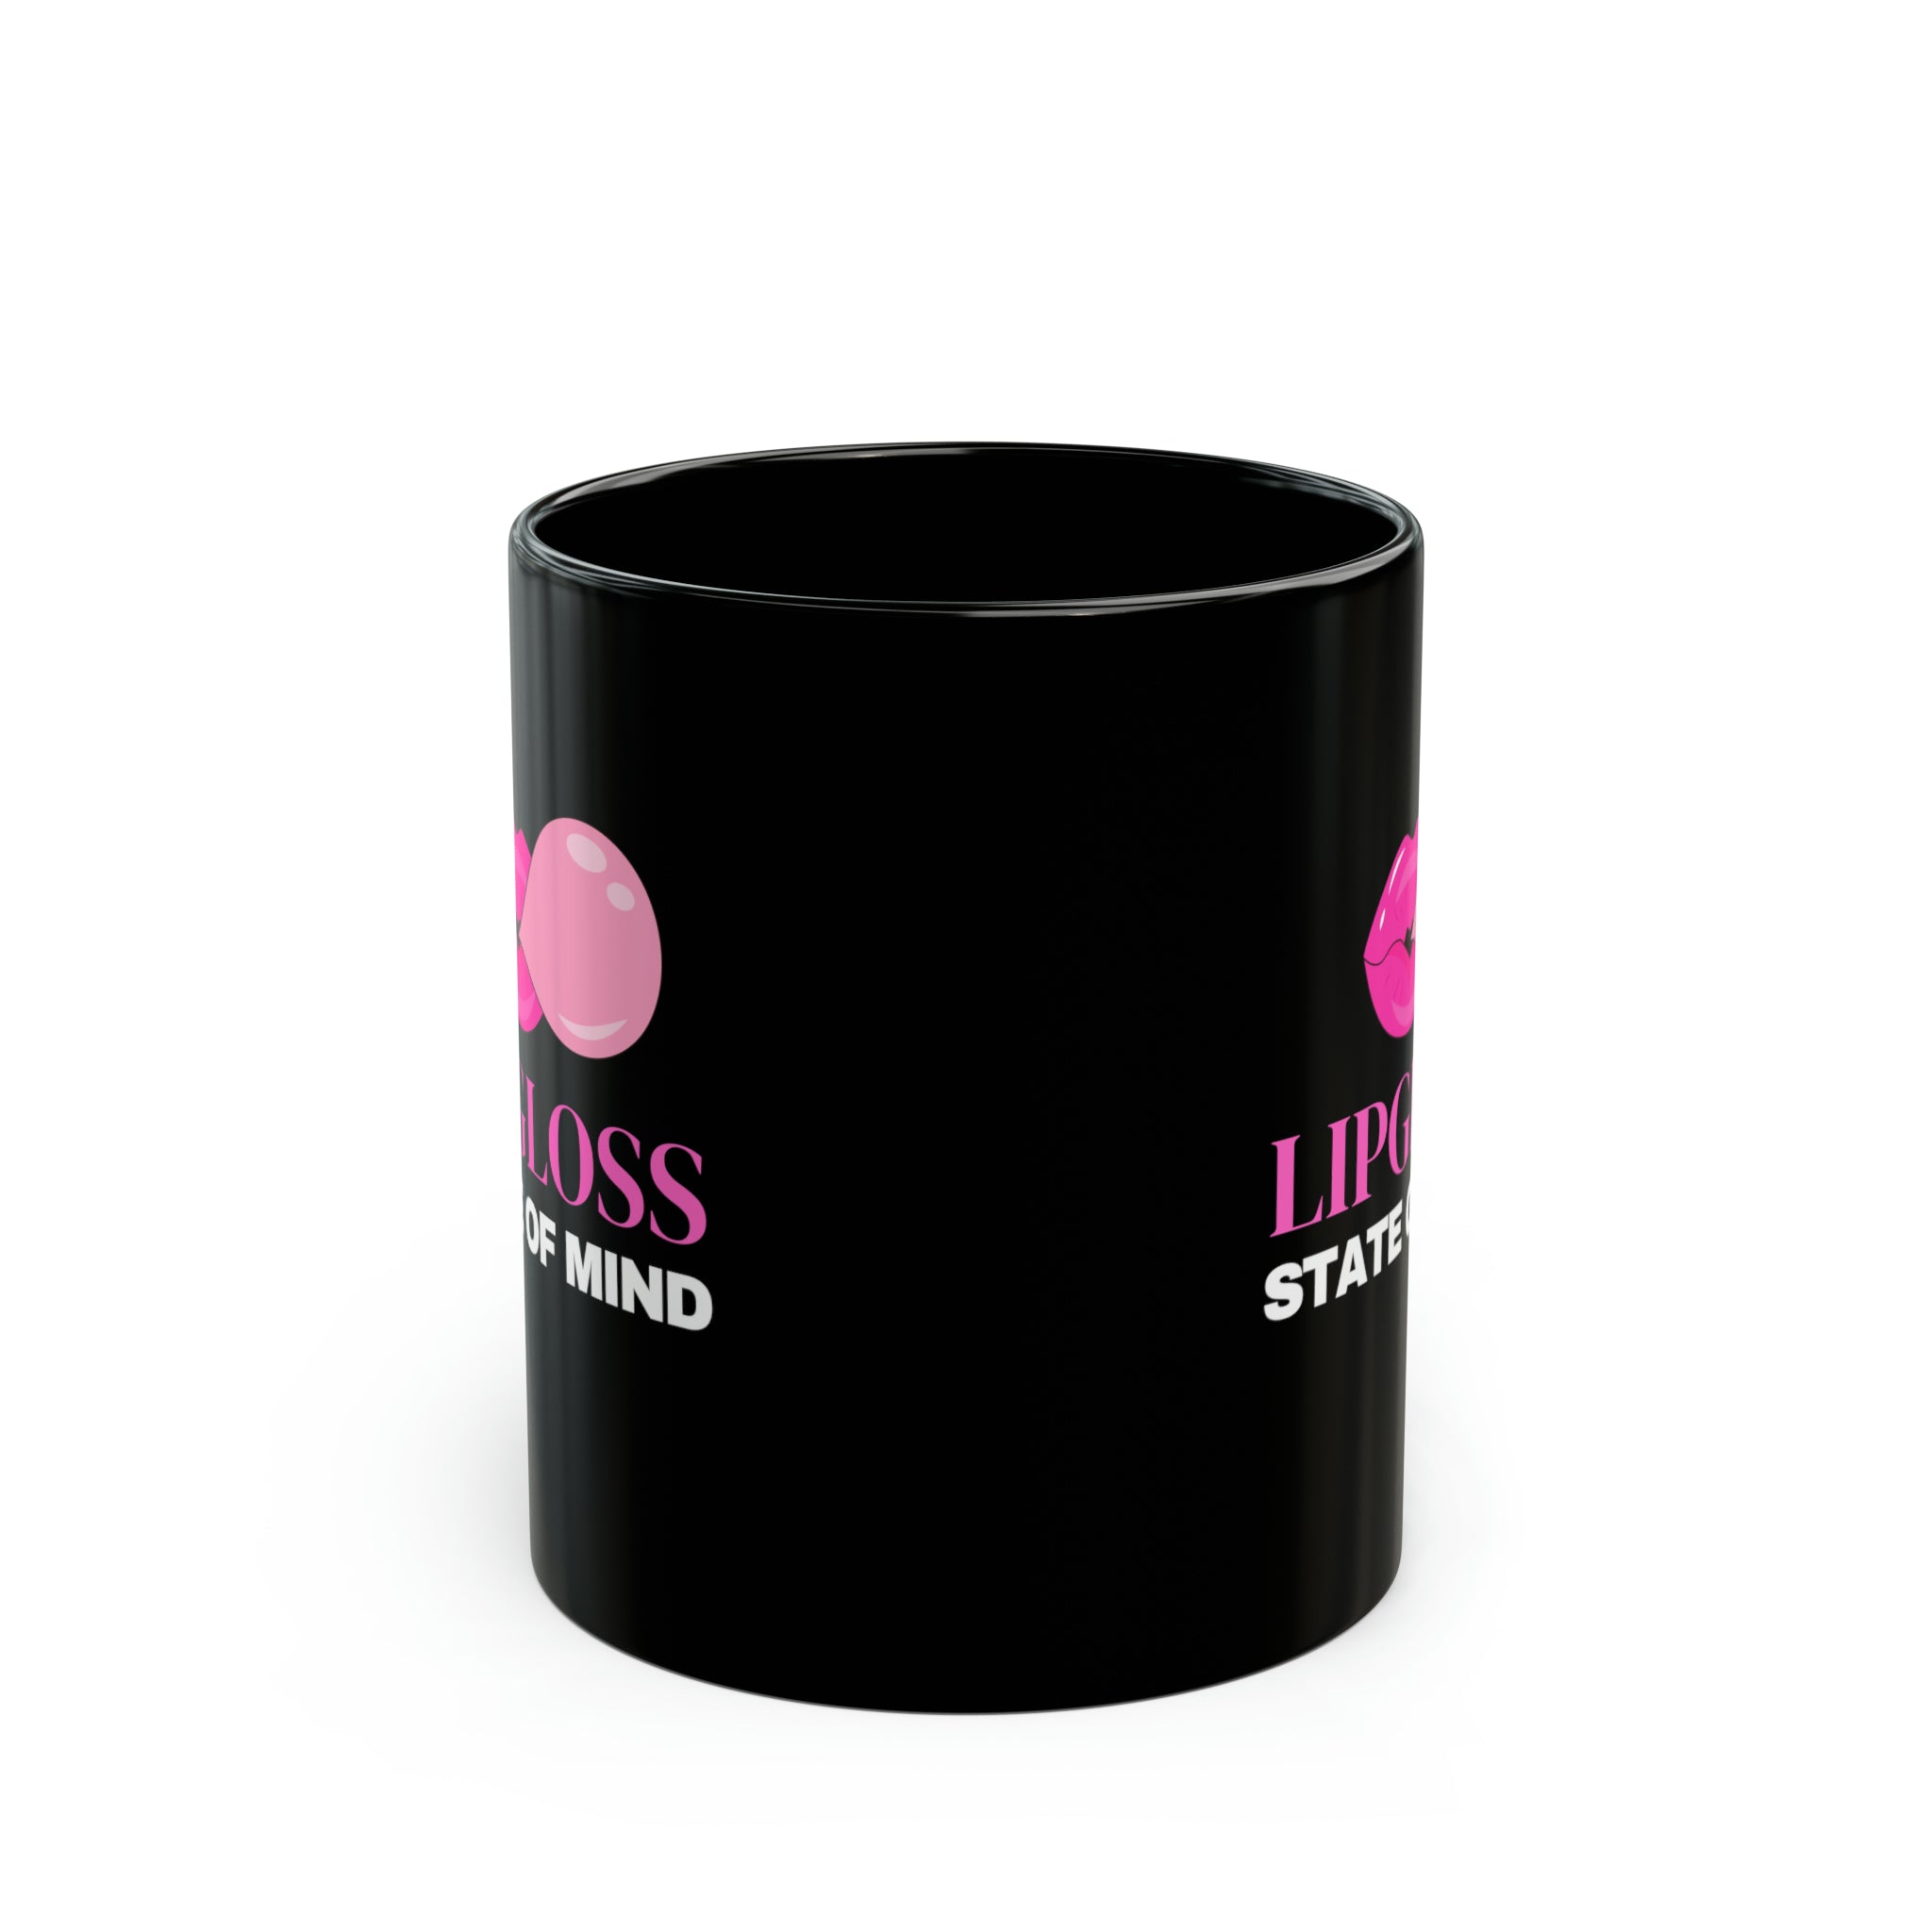 Lipgloss State of Mind (Pink Lips) 11oz Coffee Mug, Makeup Themed Coffee Mug, Beauty Business Mug, Boss Babe Cup Mug  The Middle Aged Groove